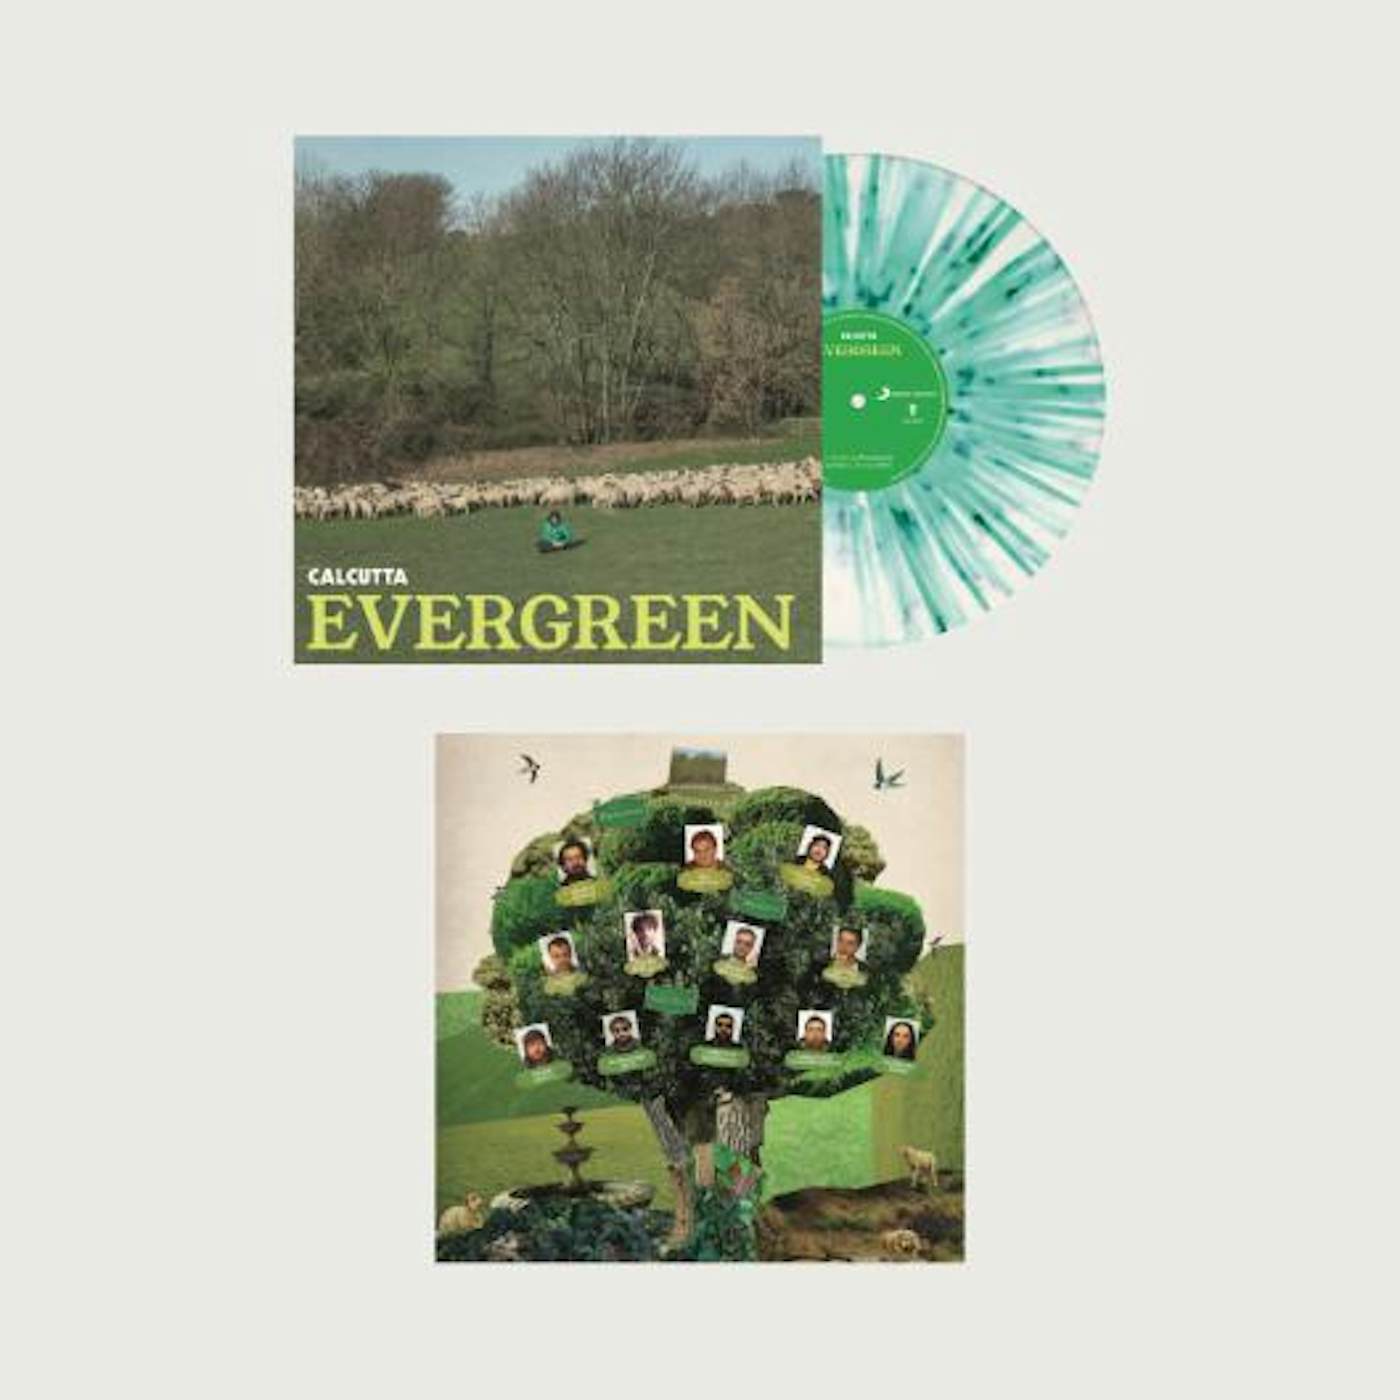 Evergreen (White & Green Splatter) Vinyl Record - Calcutta